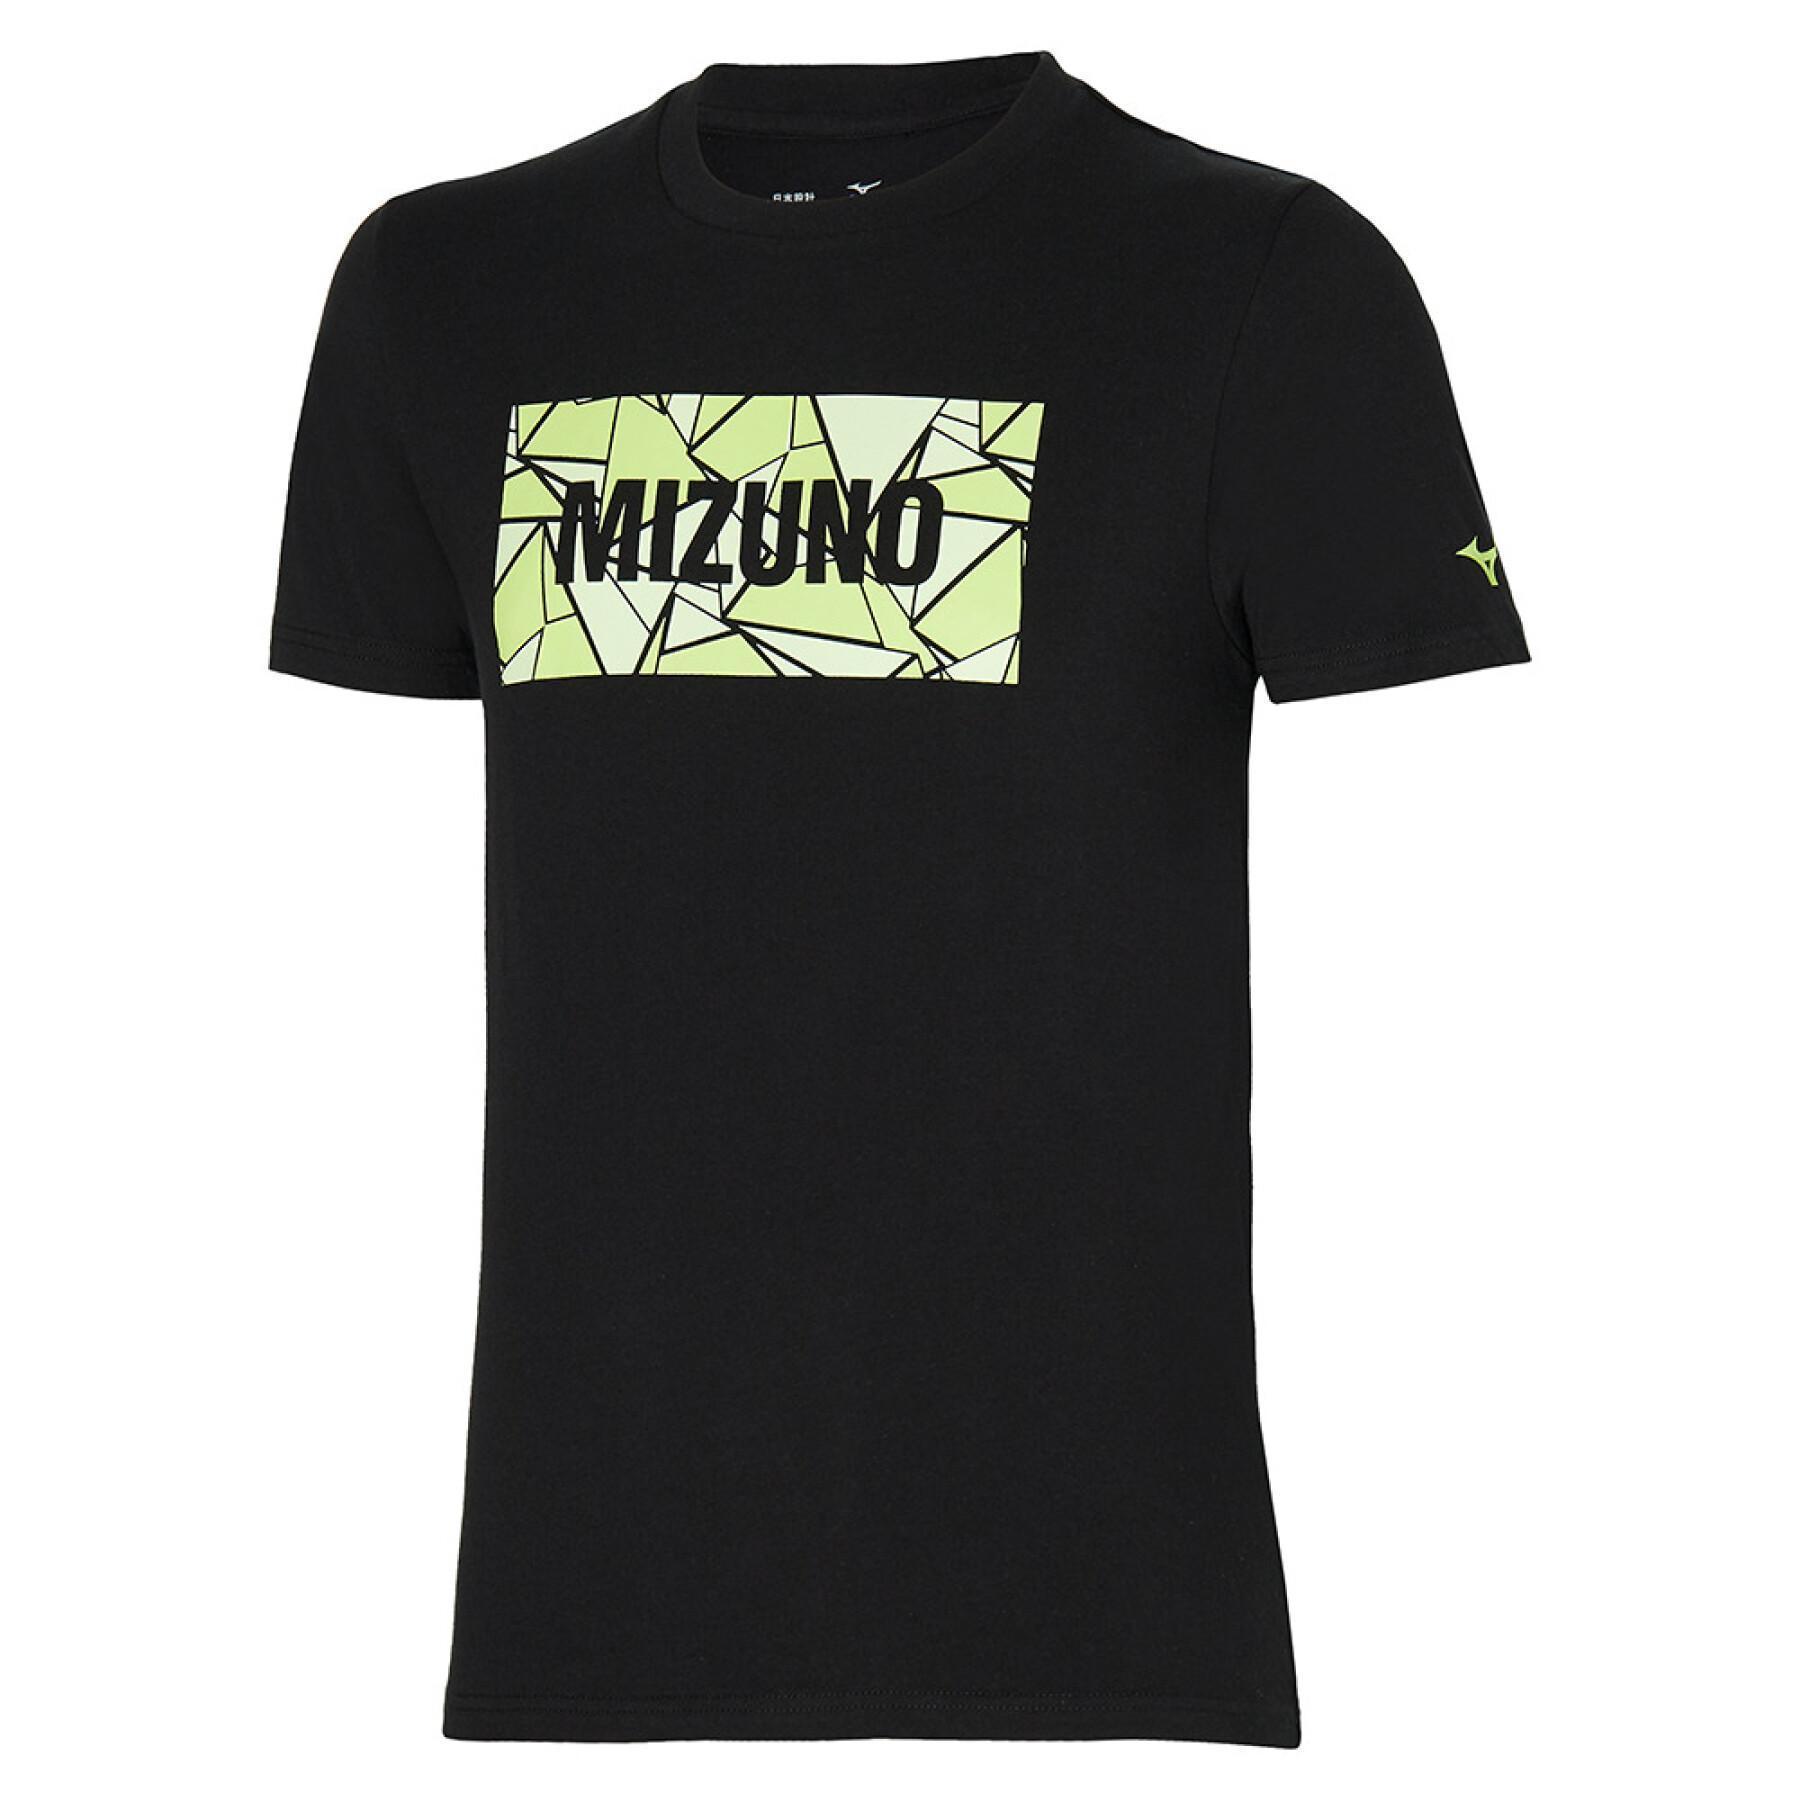 T-shirt femme Mizuno Athletic